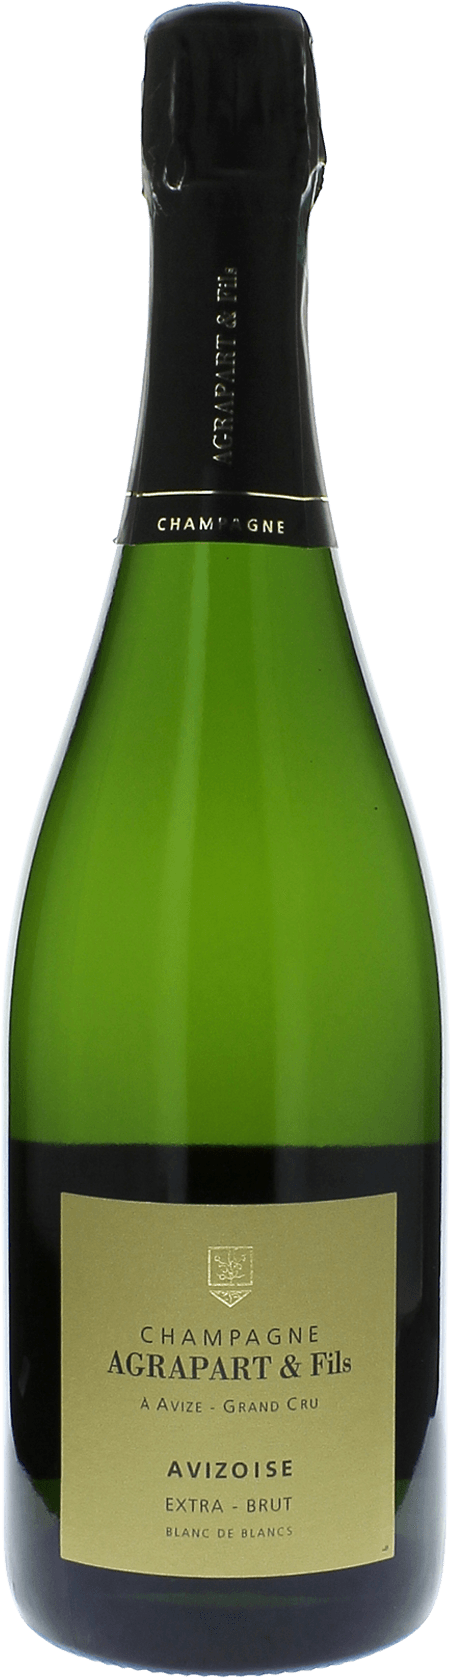 Agrapart  avizoise extra brut blanc de blancs grand cru 2013  Pascal Agrapart, Champagne